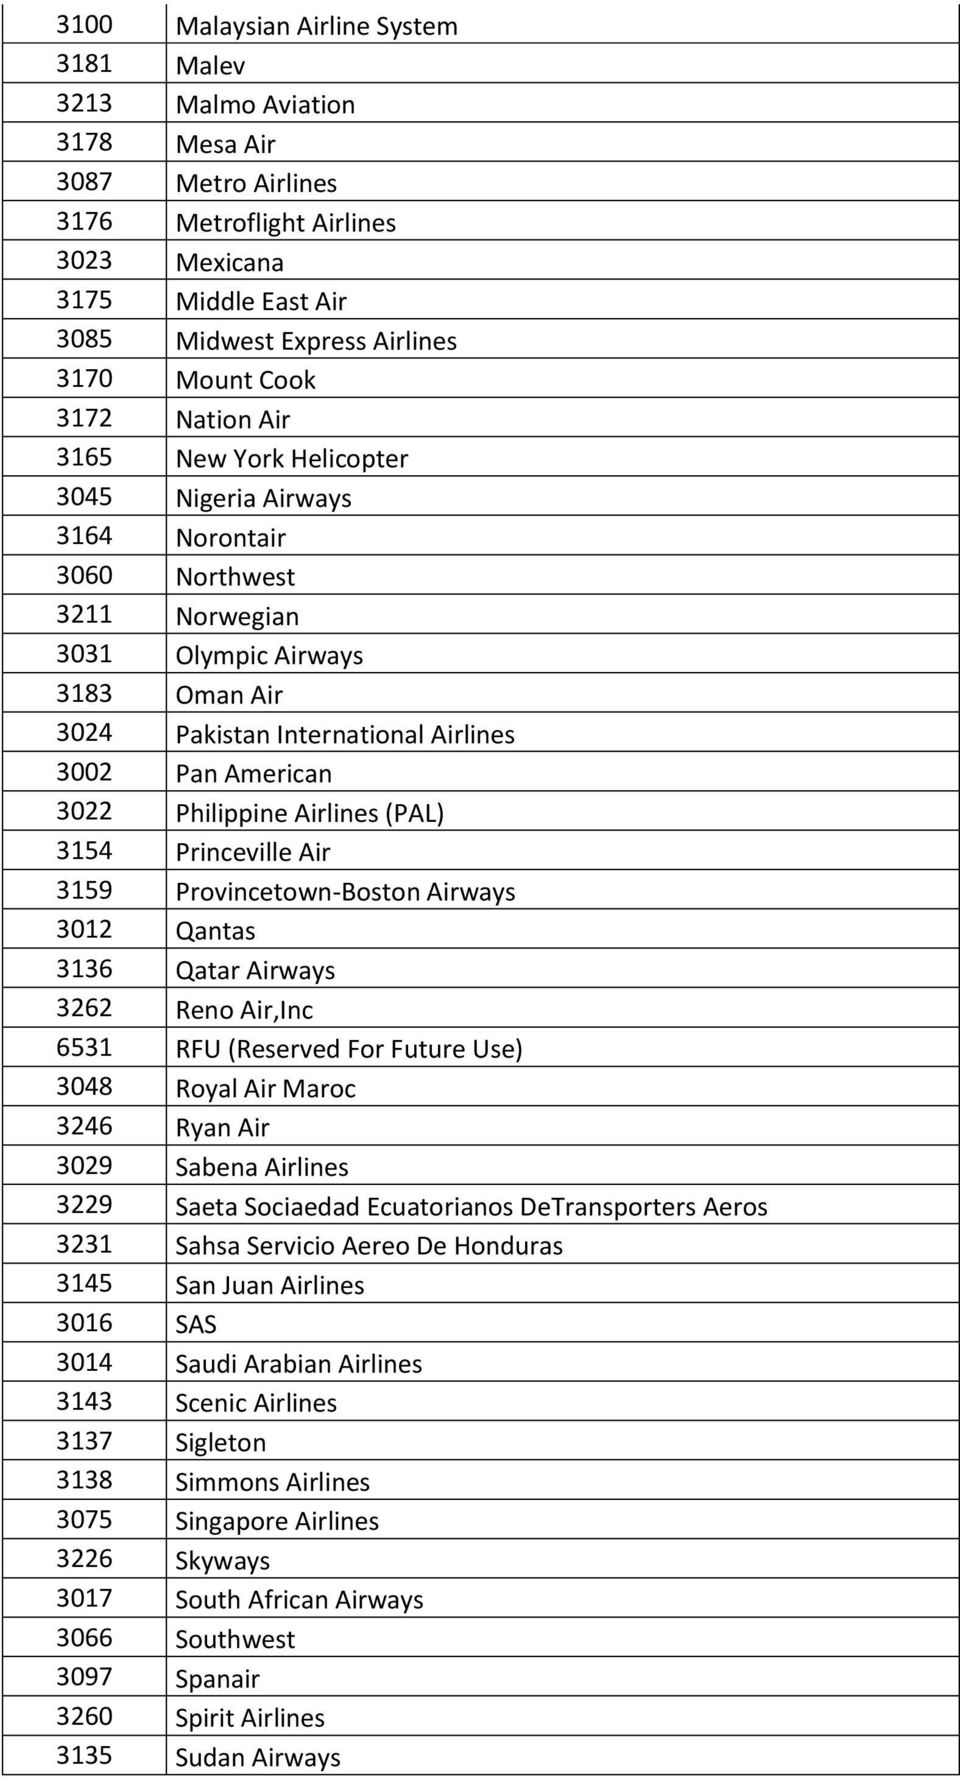 American 3022 Philippine Airlines (PAL) 3154 Princeville Air 3159 Provincetown-Boston Airways 3012 Qantas 3136 Qatar Airways 3262 Reno Air,Inc 6531 RFU (Reserved For Future Use) 3048 Royal Air Maroc